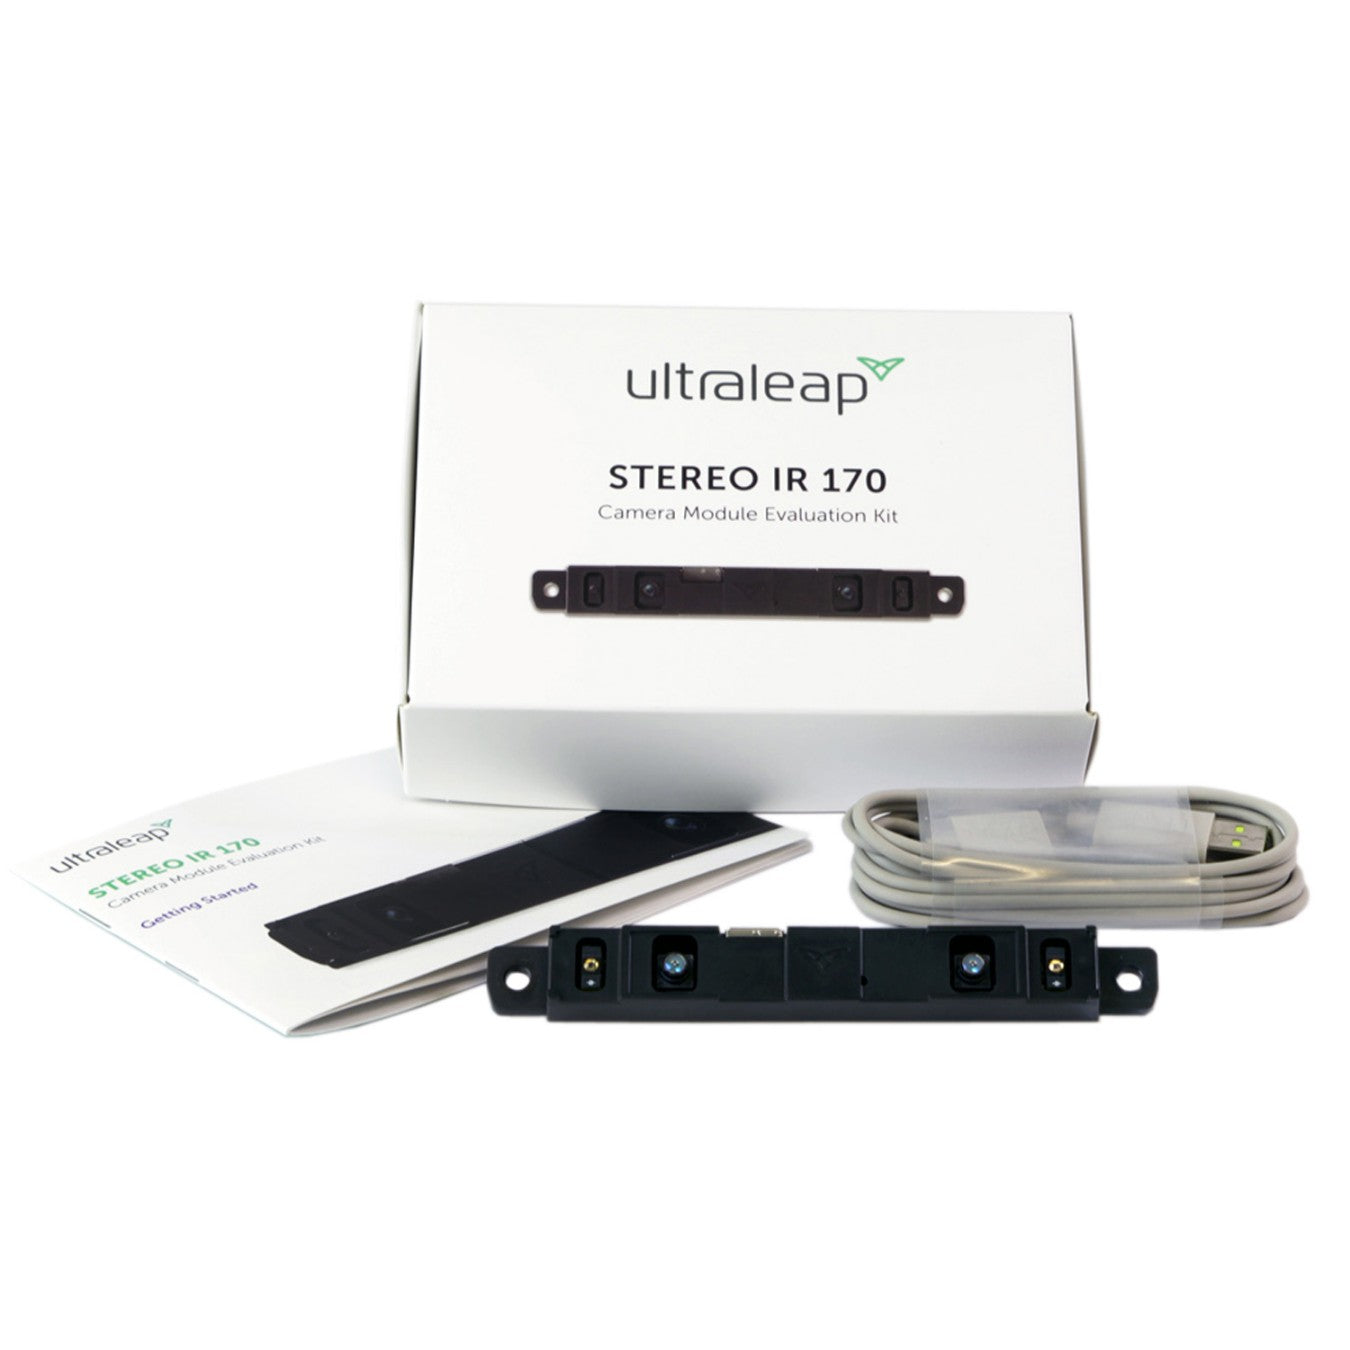 Ultraleap Stereo IR 170 Camera Module Evaluation Kit